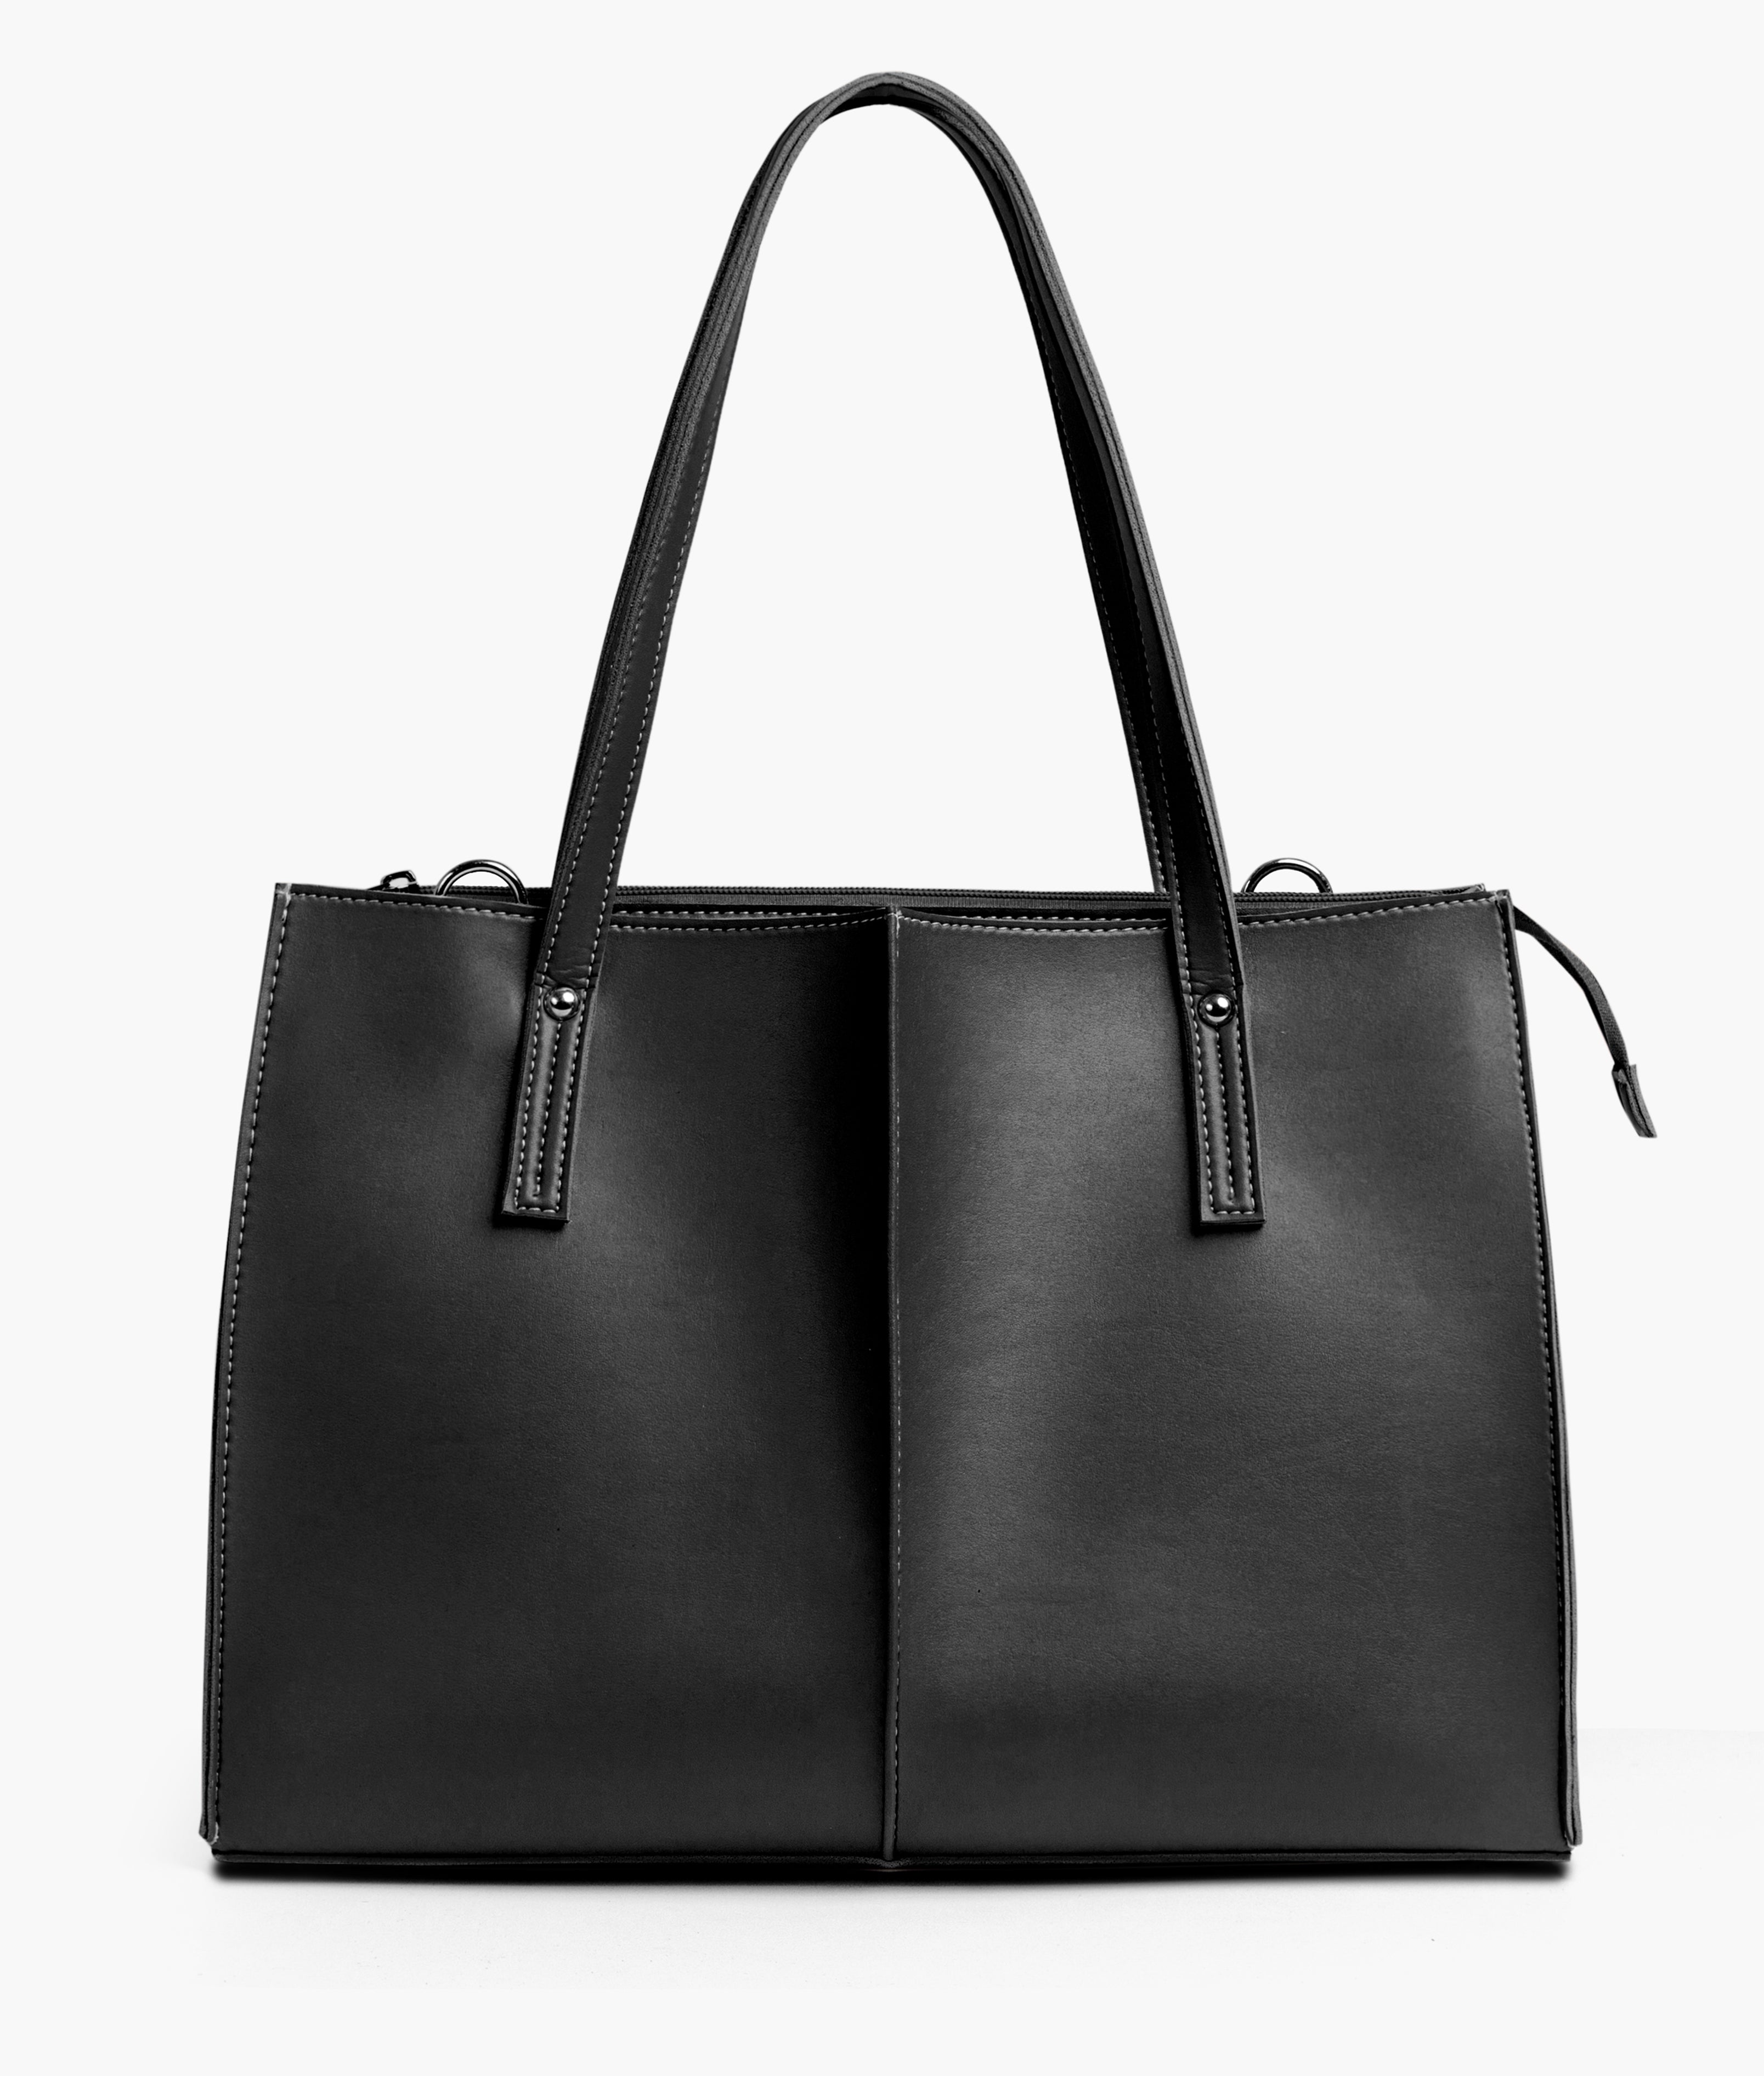 Black work tote bag